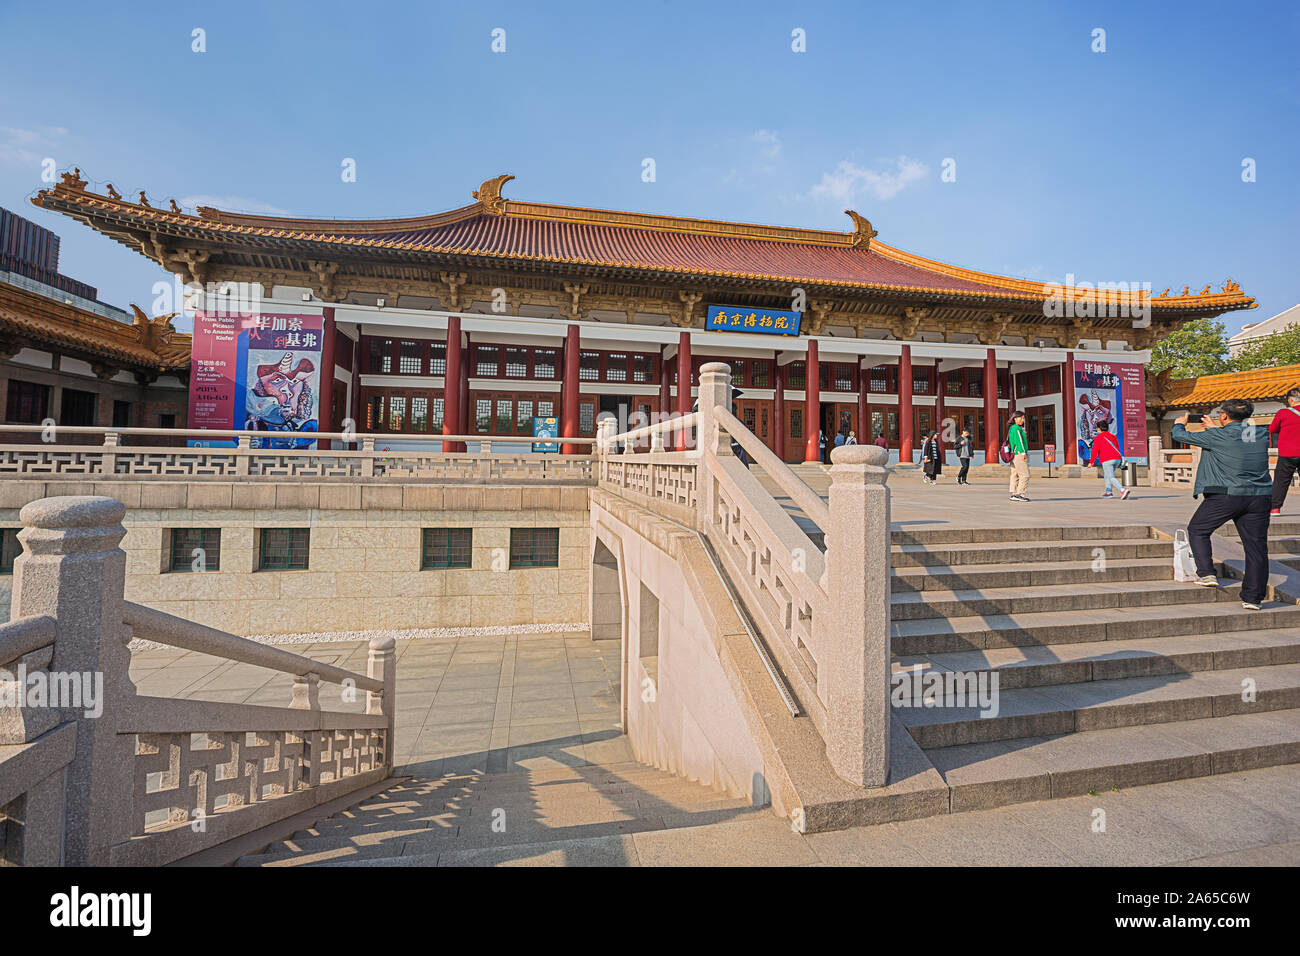 Editorial: NANJING, JIANGSU, CHINA, April 14, 2019 - Outside the Nanjing museum with numerous visitors Stock Photo